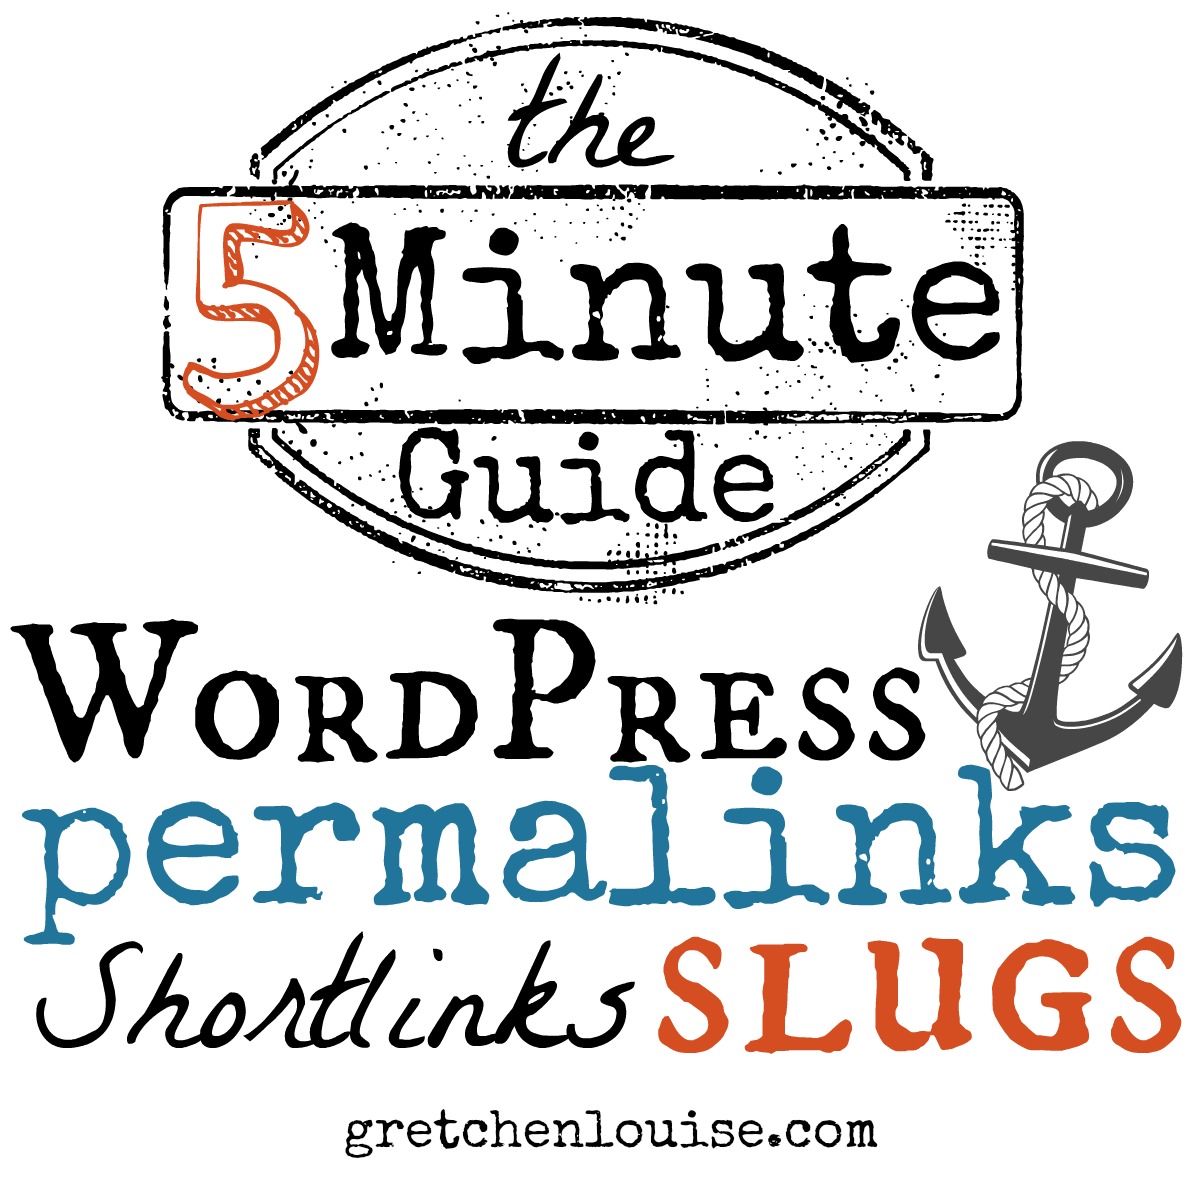 The 5 Minute Guide to WordPress Permalinks, Shortlinks, and Slugs